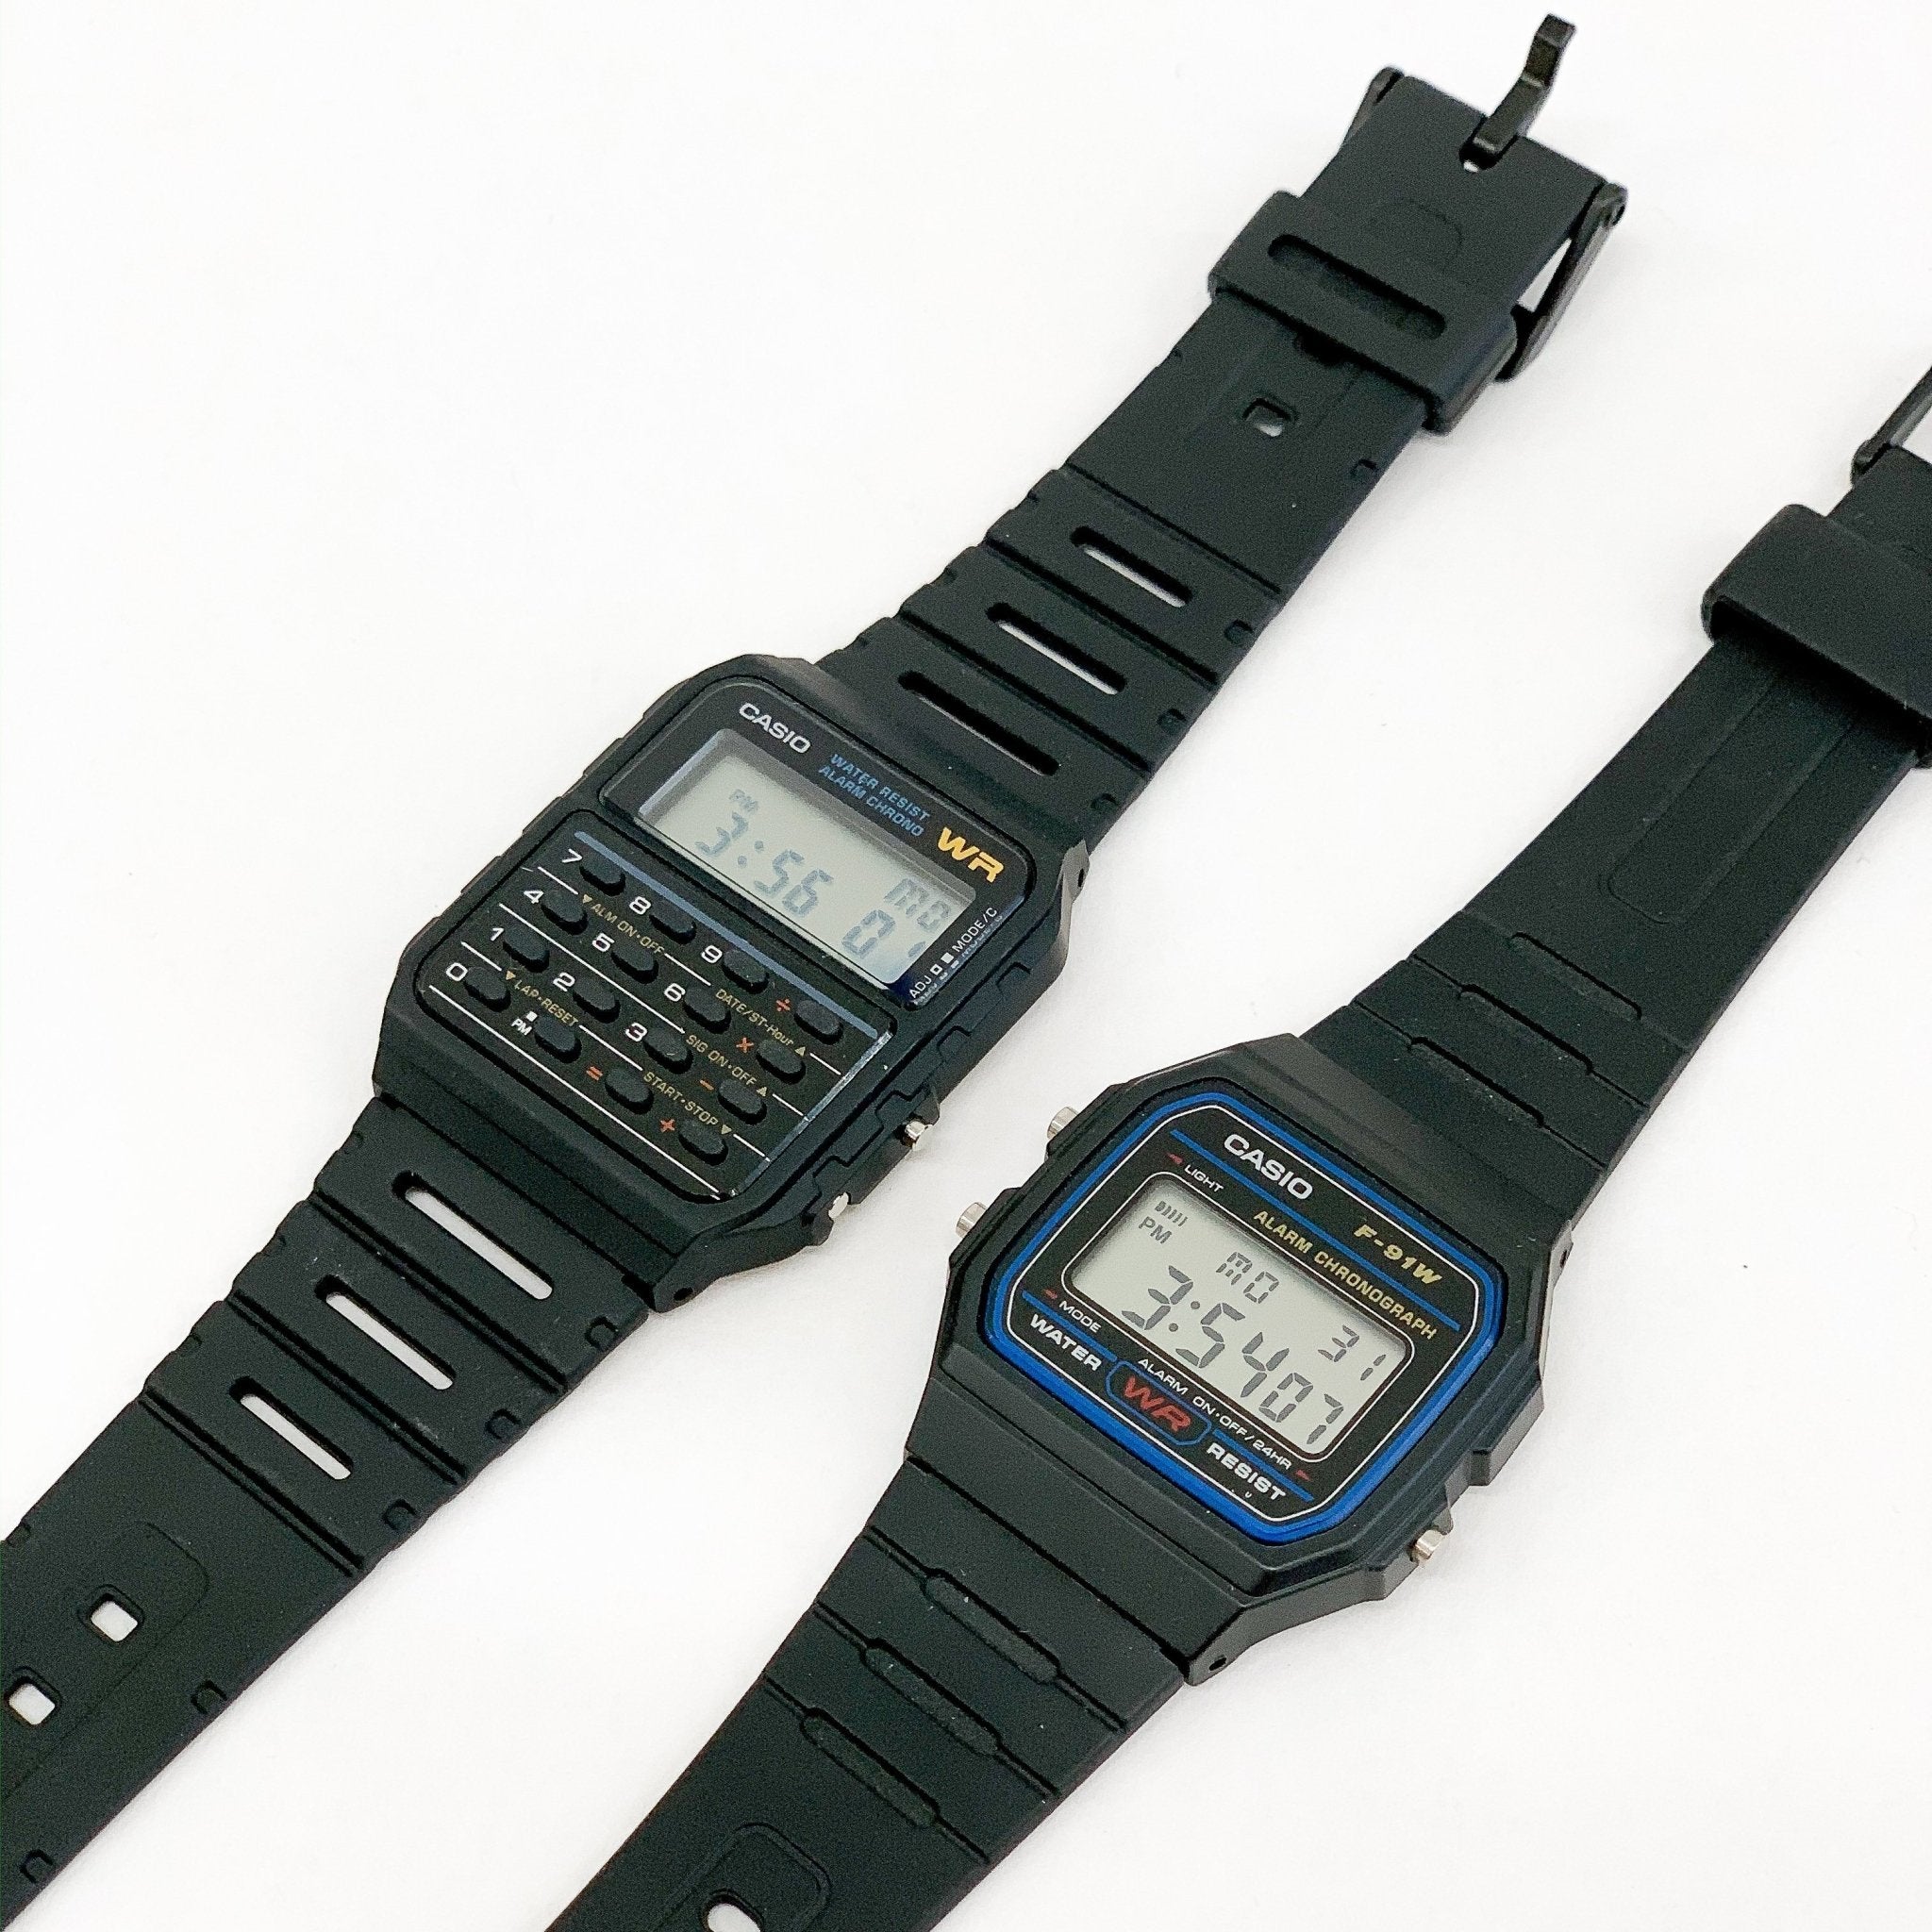 Korn Afledning skab Casio Watches | Tortoise General Store